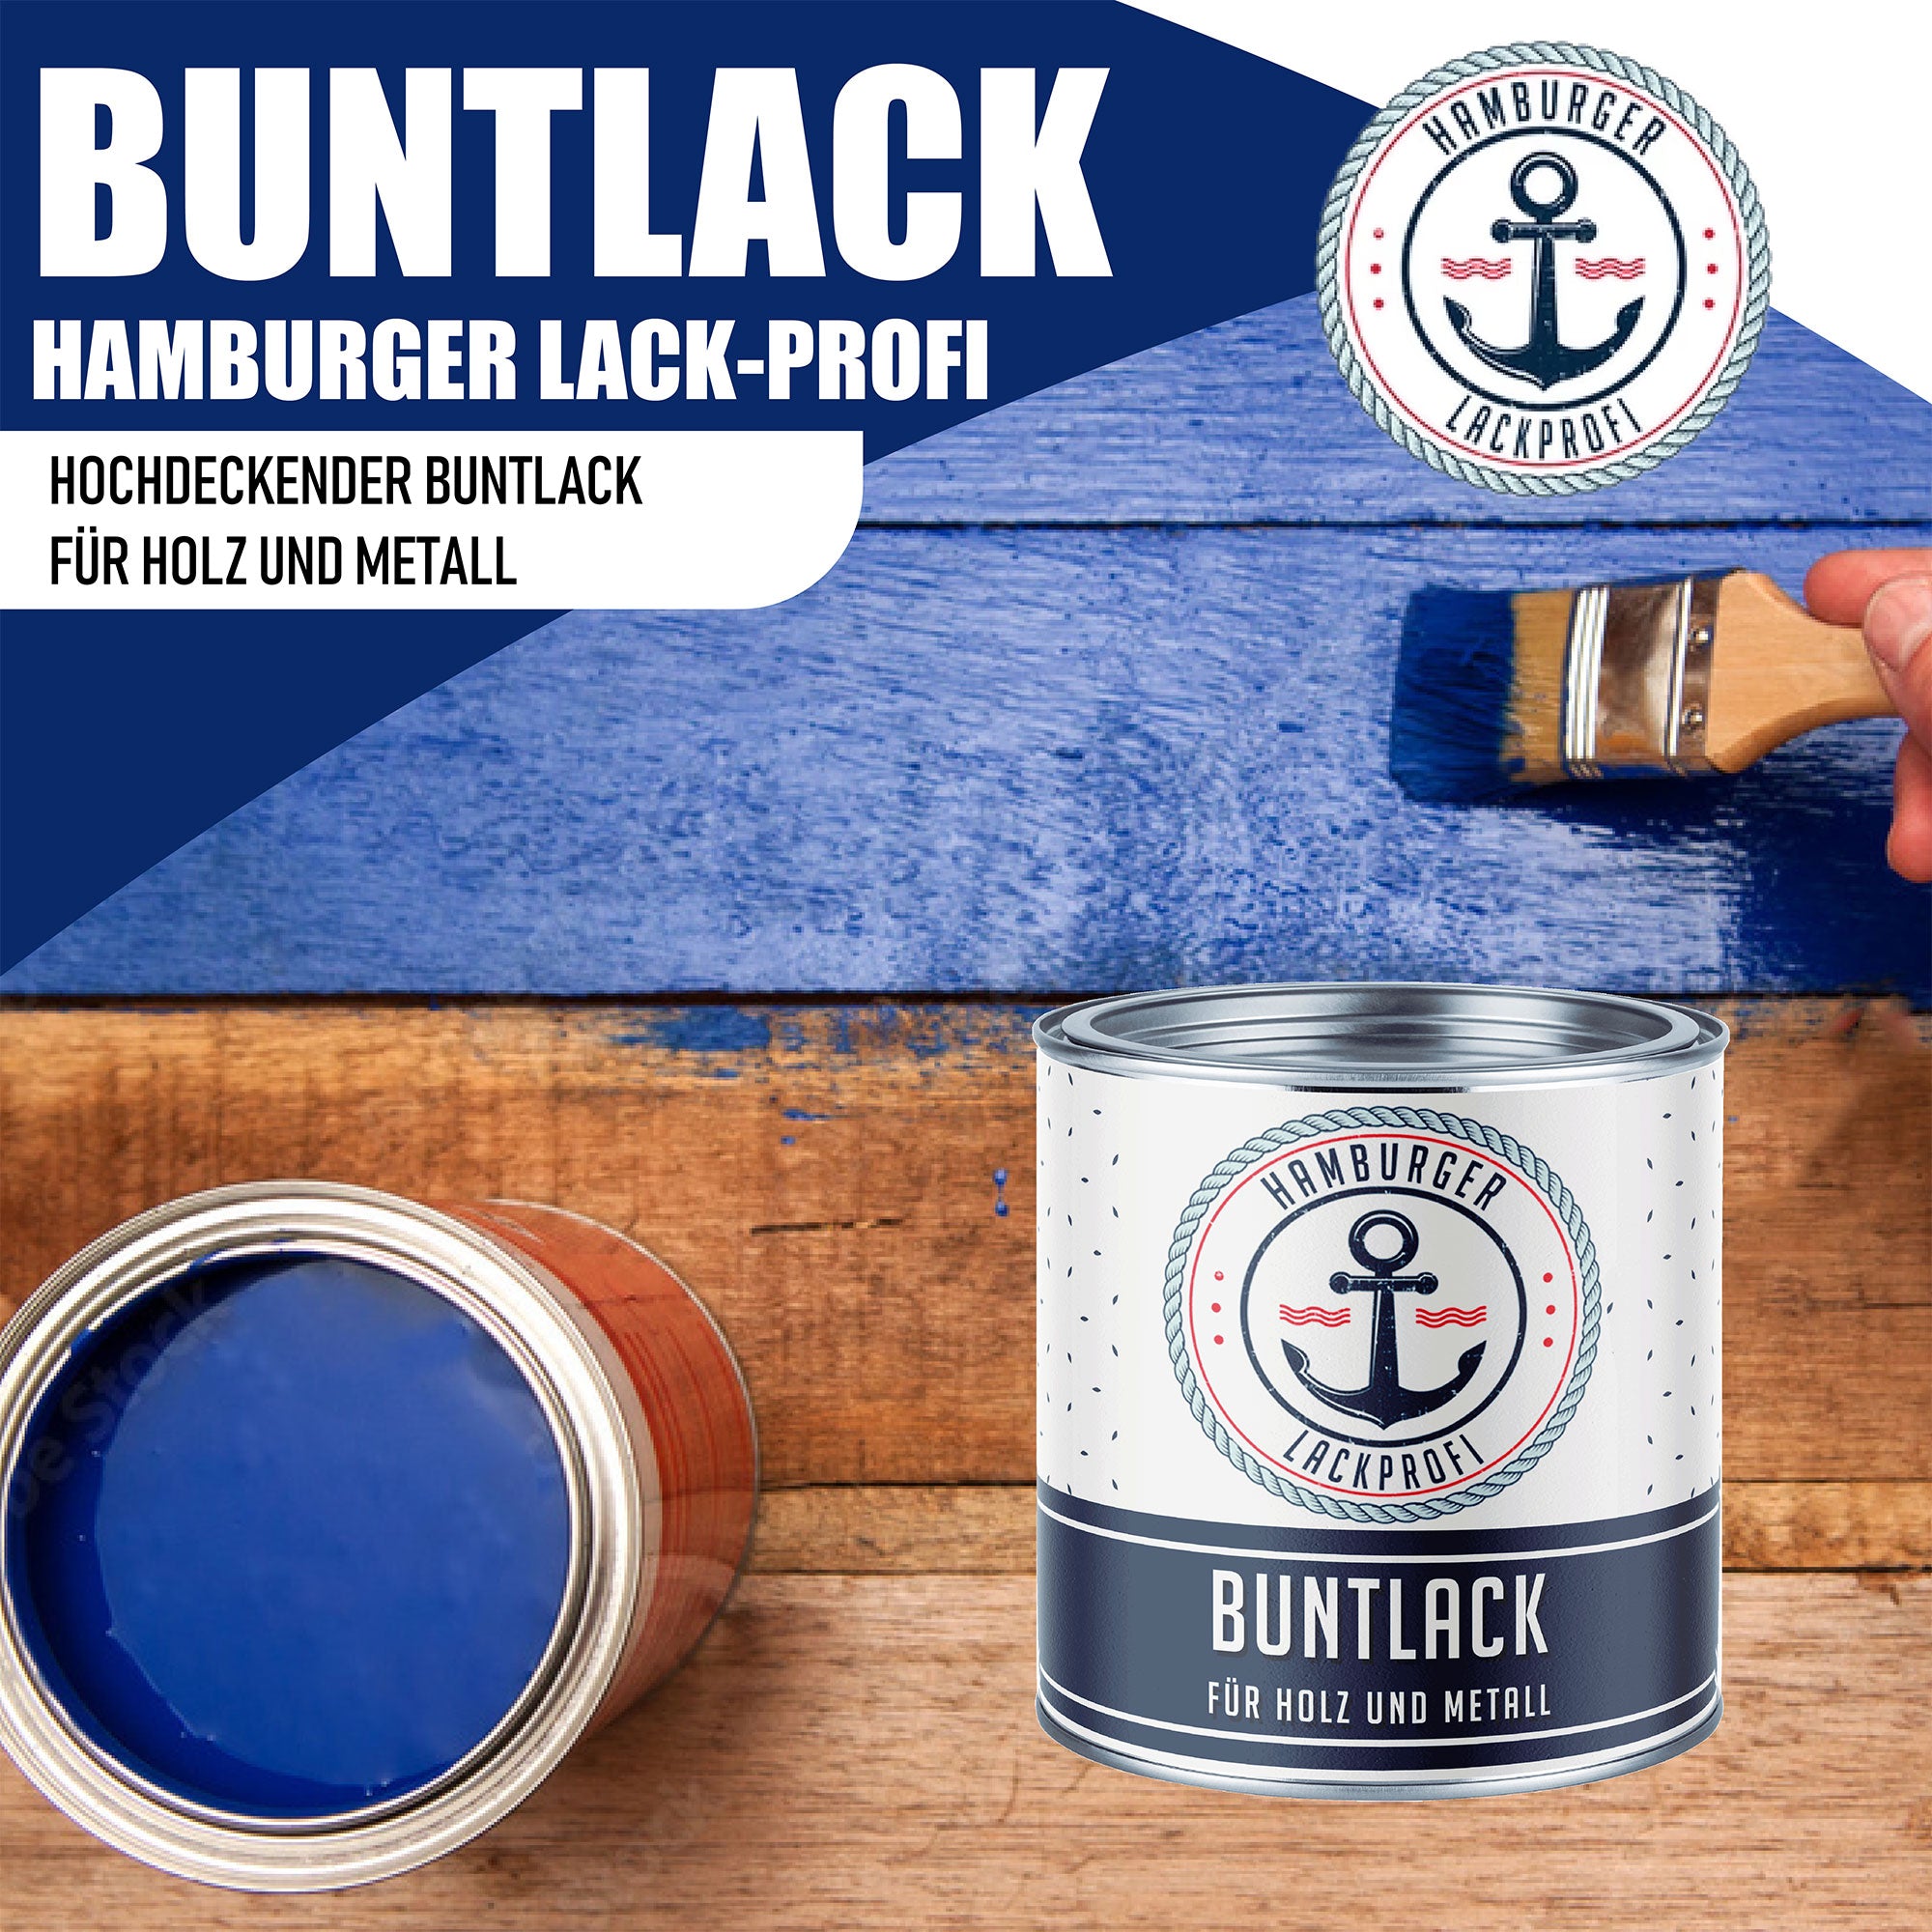 Hamburger Lack-Profi Buntlack Ultramarinblau RAL 5002 - Robuster Kunstharzlack